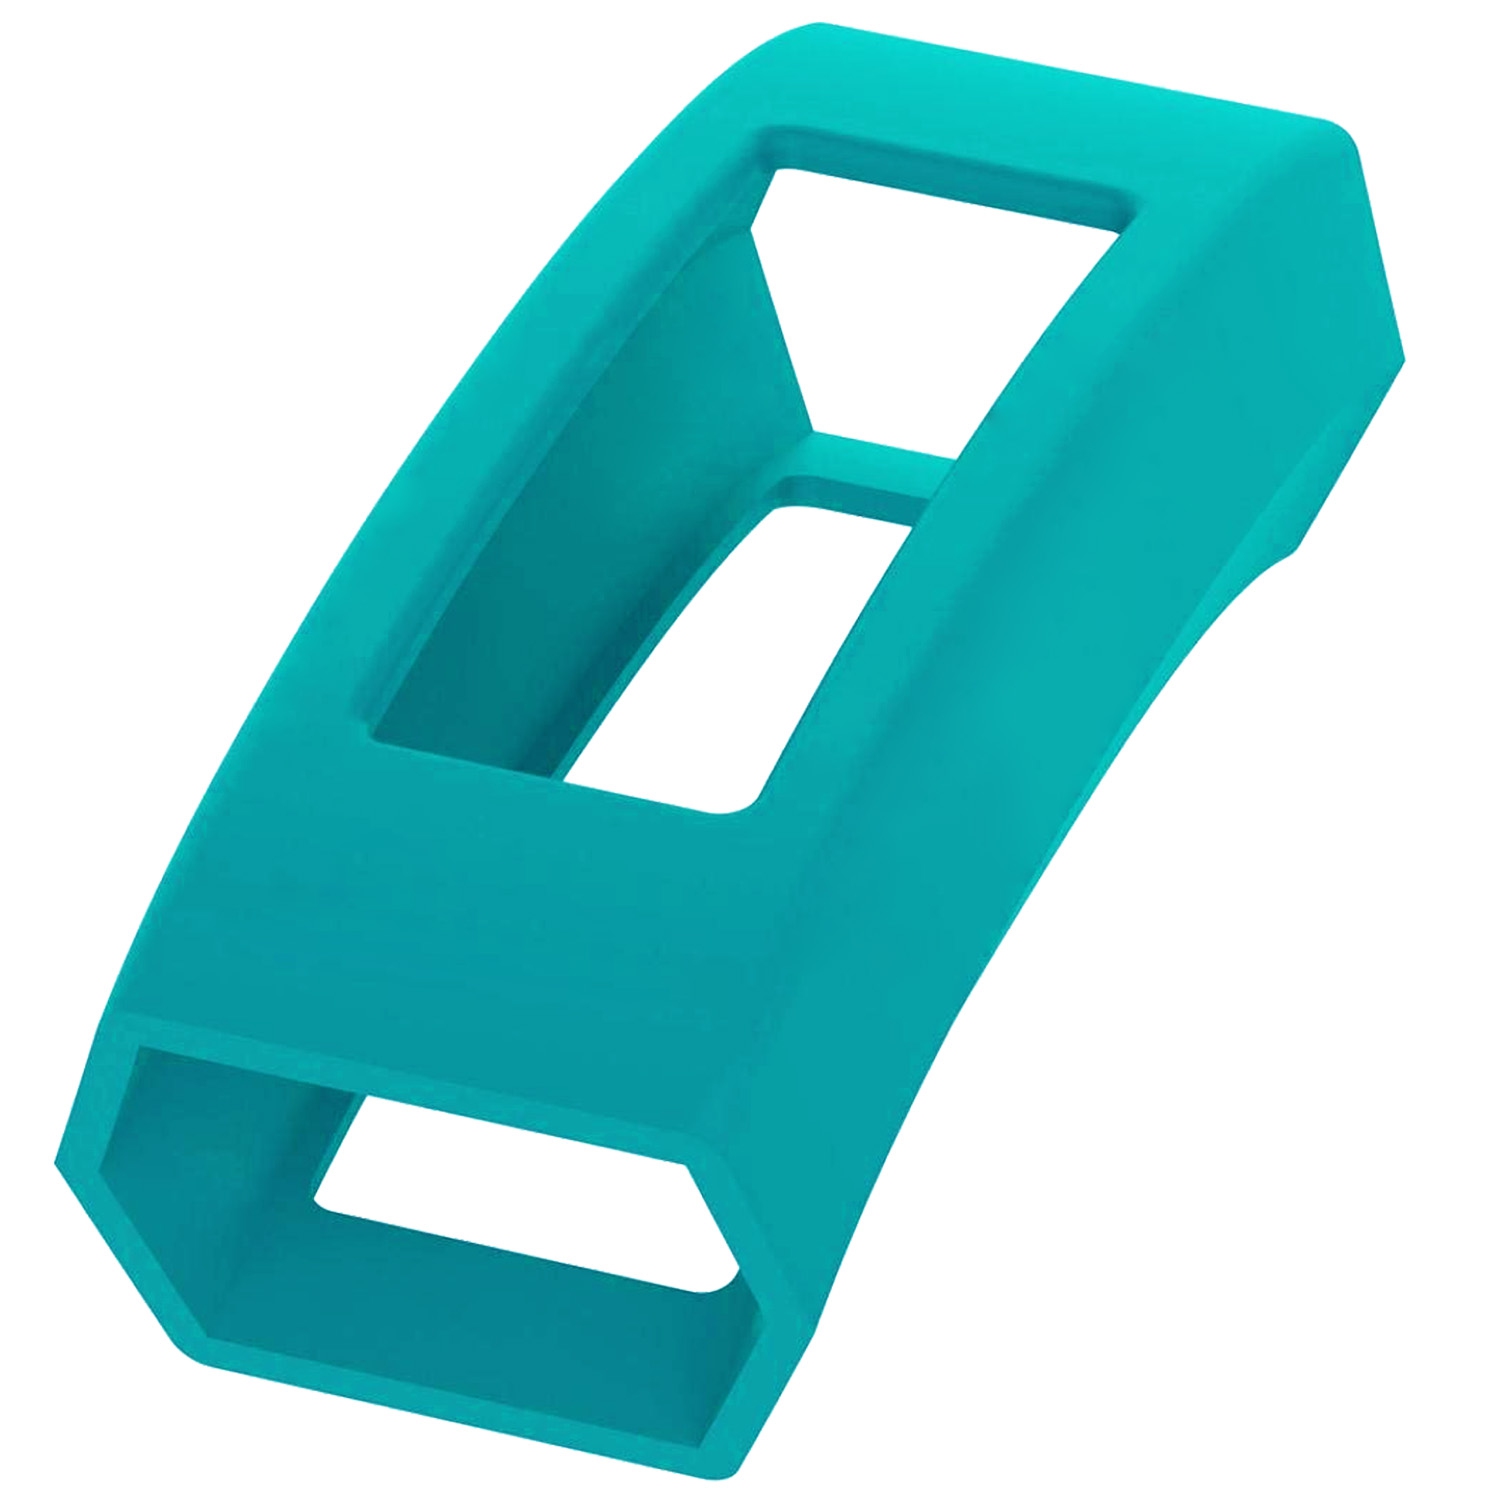 StrapsCo Silicone Rubber Protective Case Cover for Fitbit Alta & Alta HR - Teal